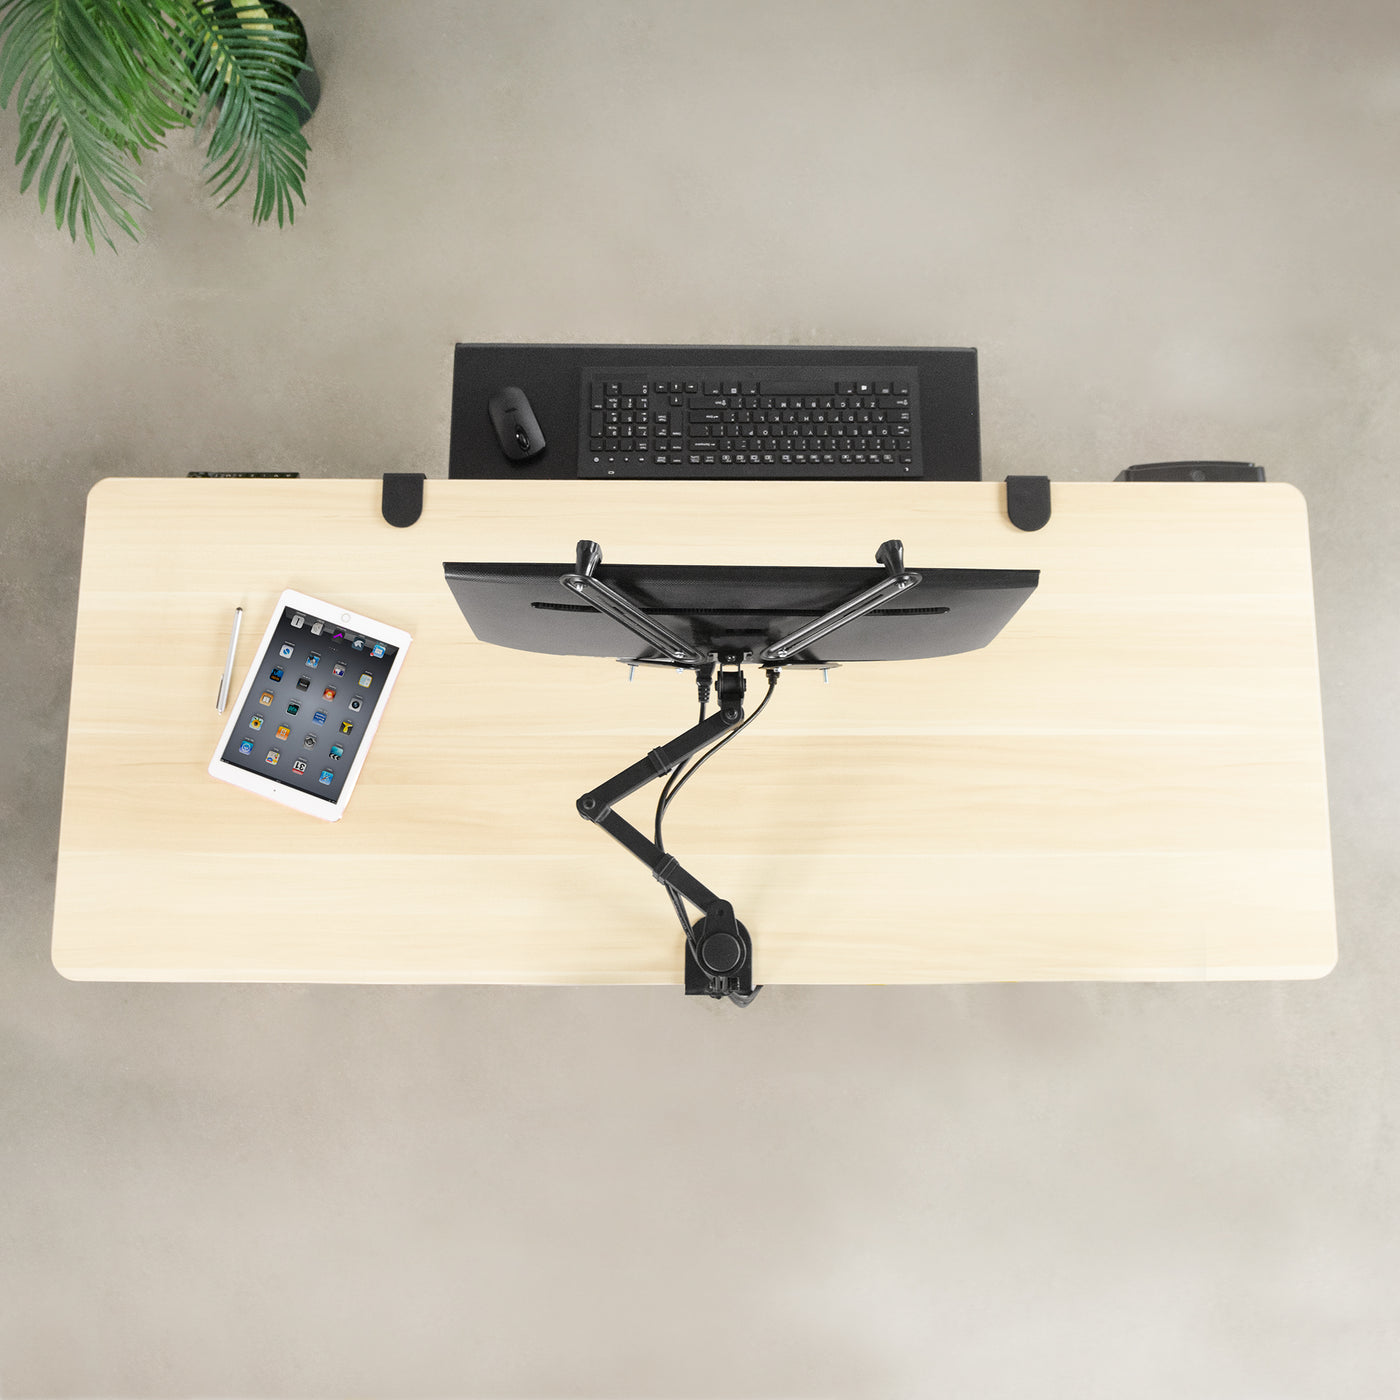 VESA Adapter Bracket Kit – VIVO - desk solutions, screen mounting, and more